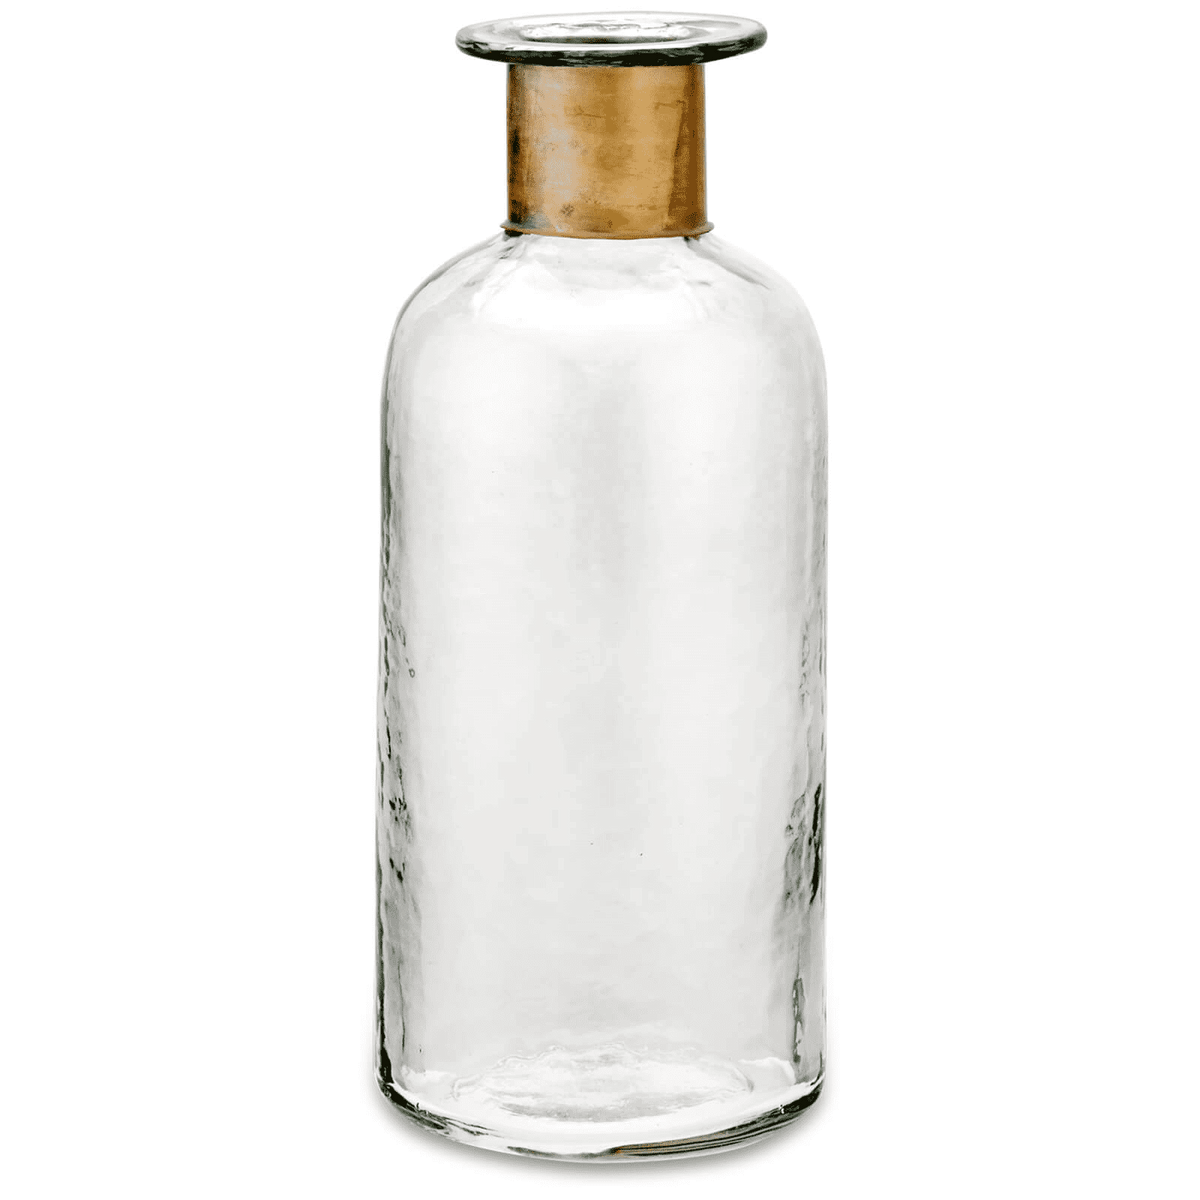 Chara Hammered Bottle Vase - Hammered Small